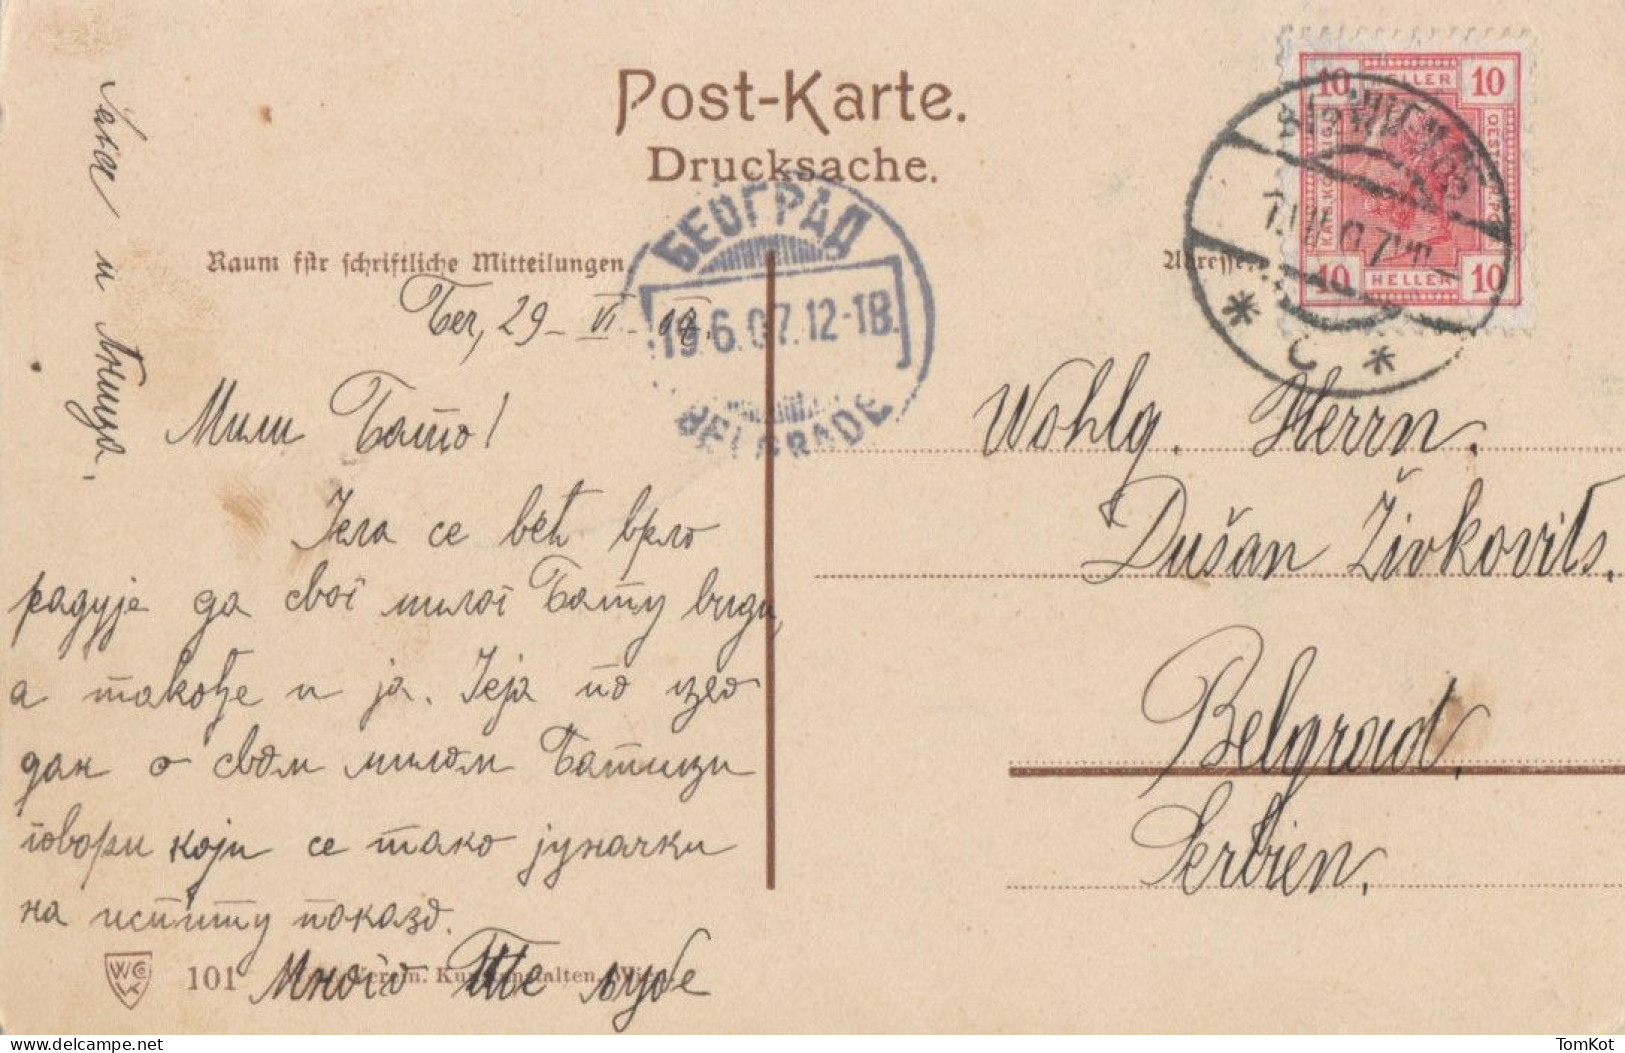 Old Postcard Wien I. Maria Theresien - Platz. - Storia Postale